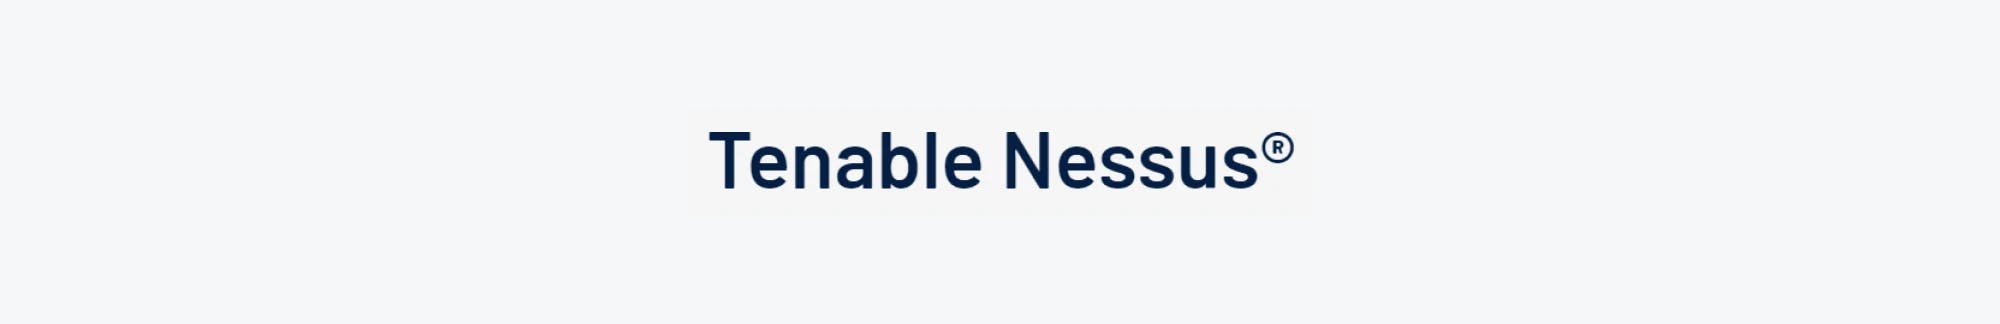 Tenable Nessus logo